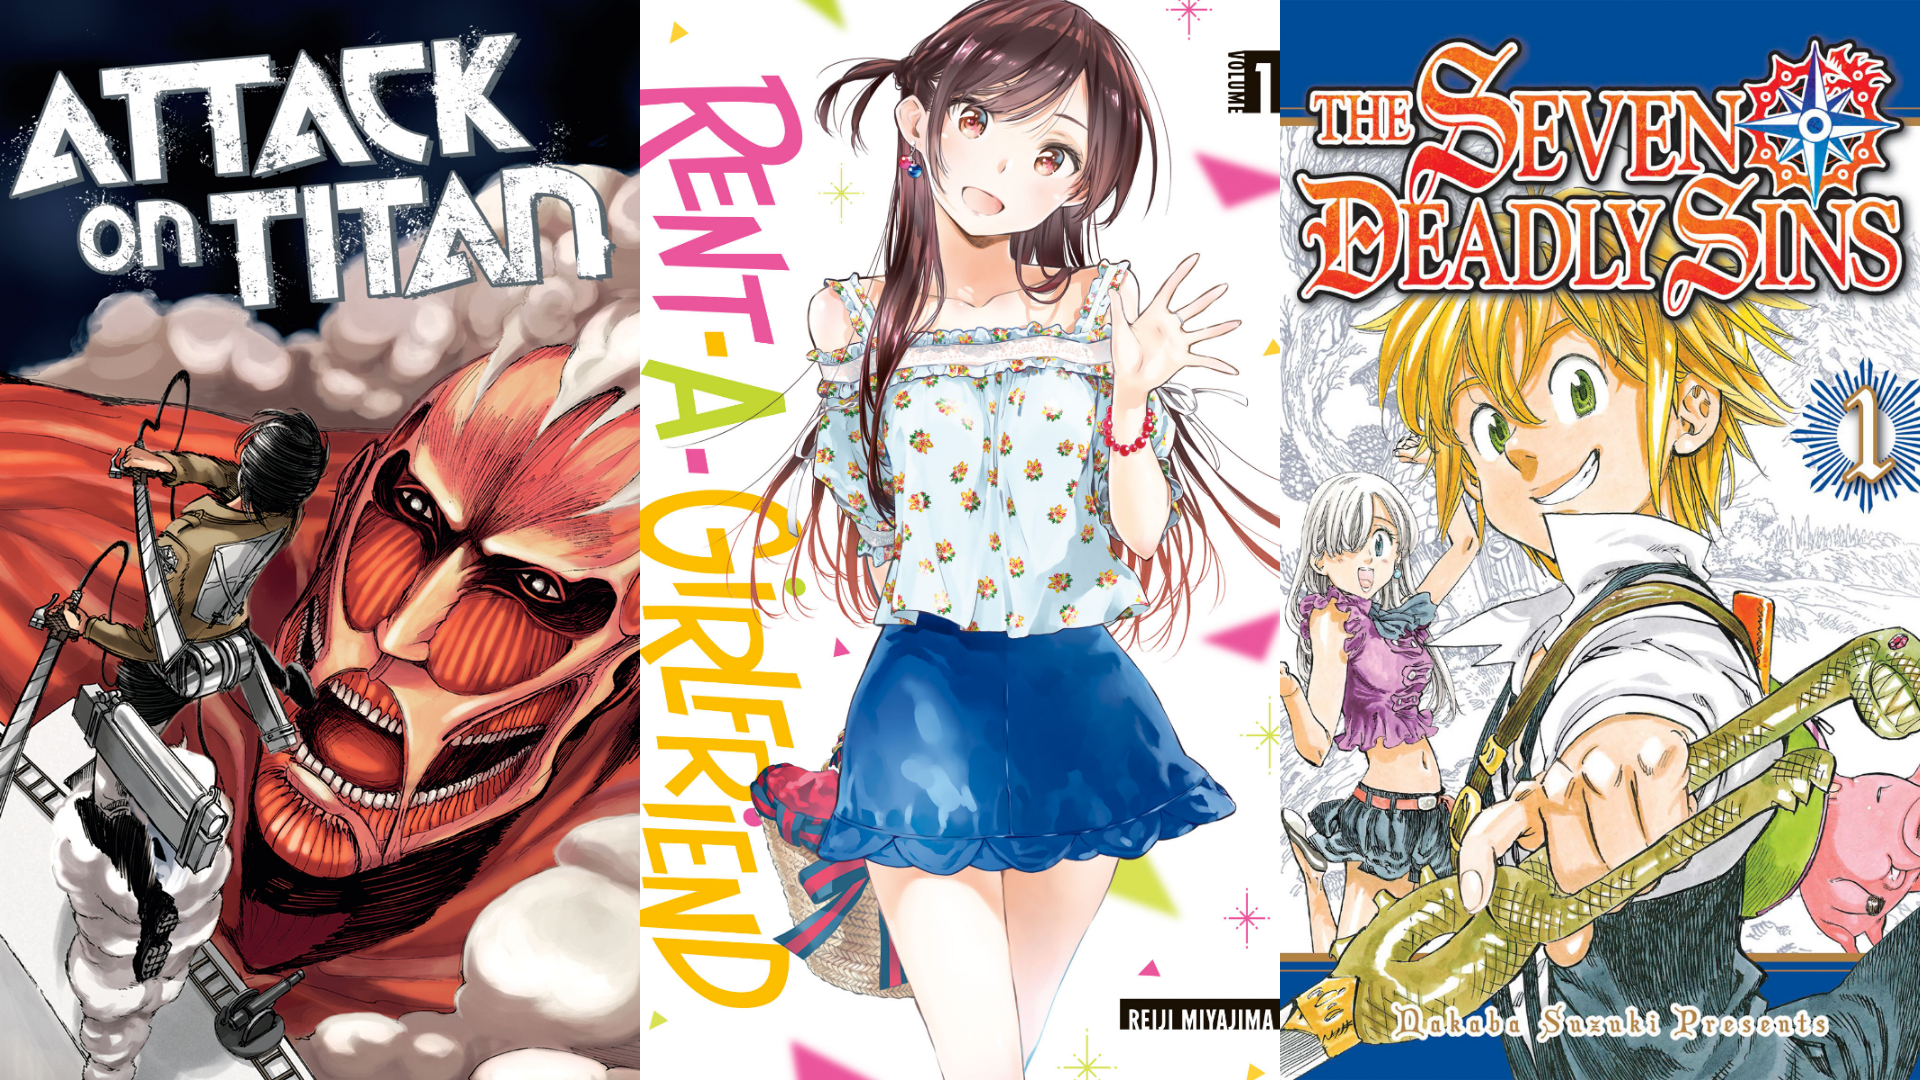 Kodansha Comics Manga ( New )